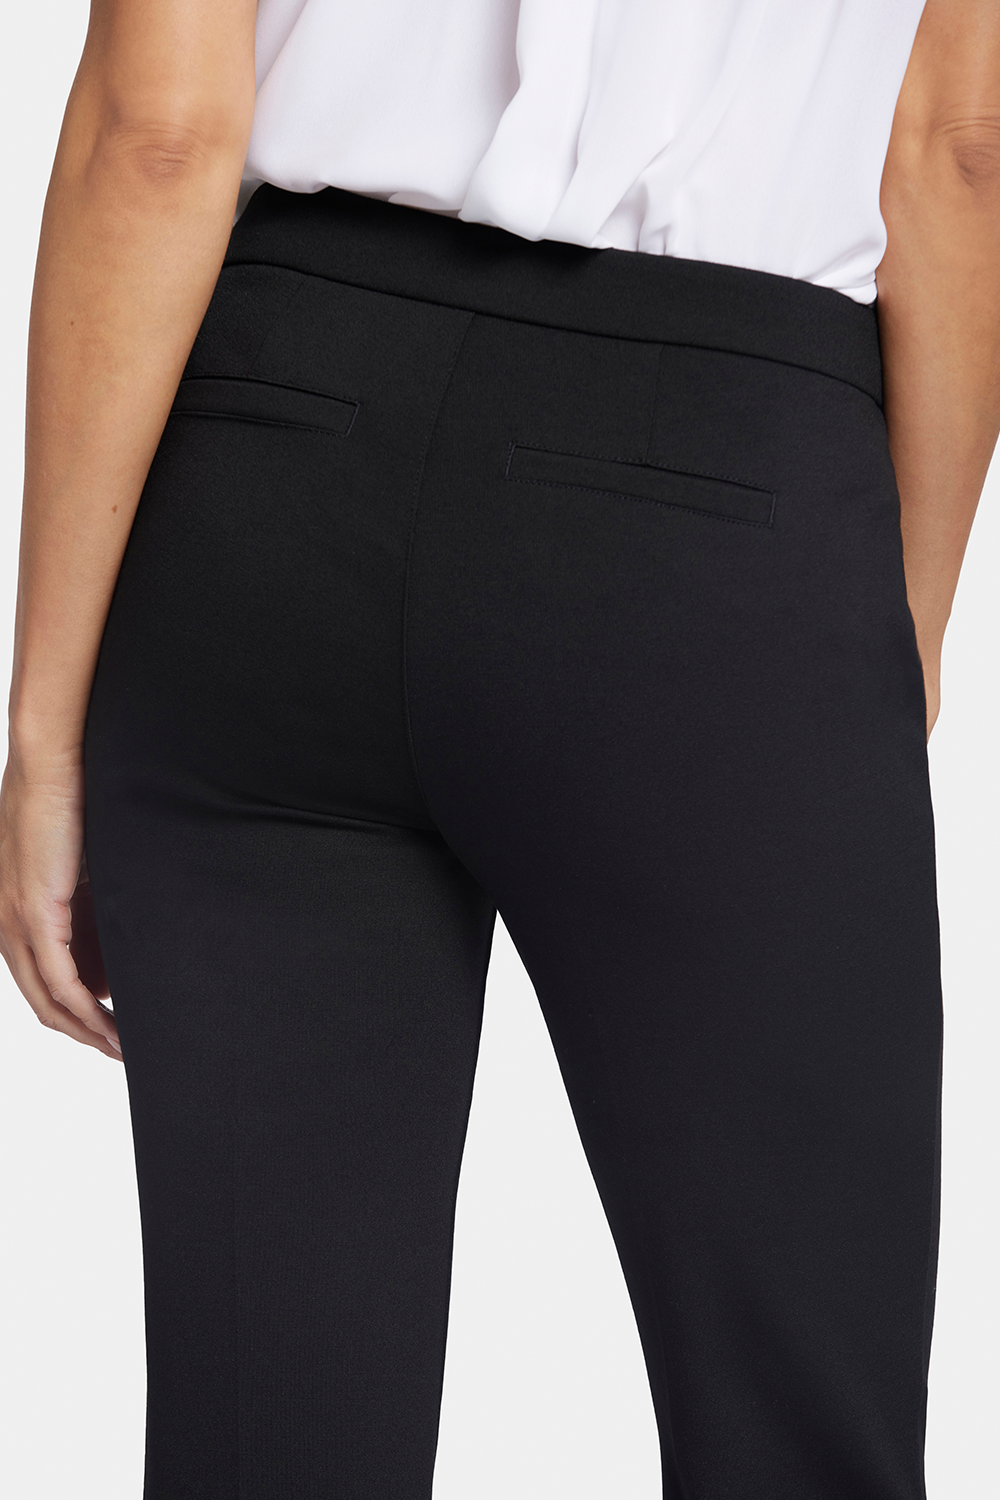 Slim Trouser Pants In Petite In Ponte Knit - Black Black